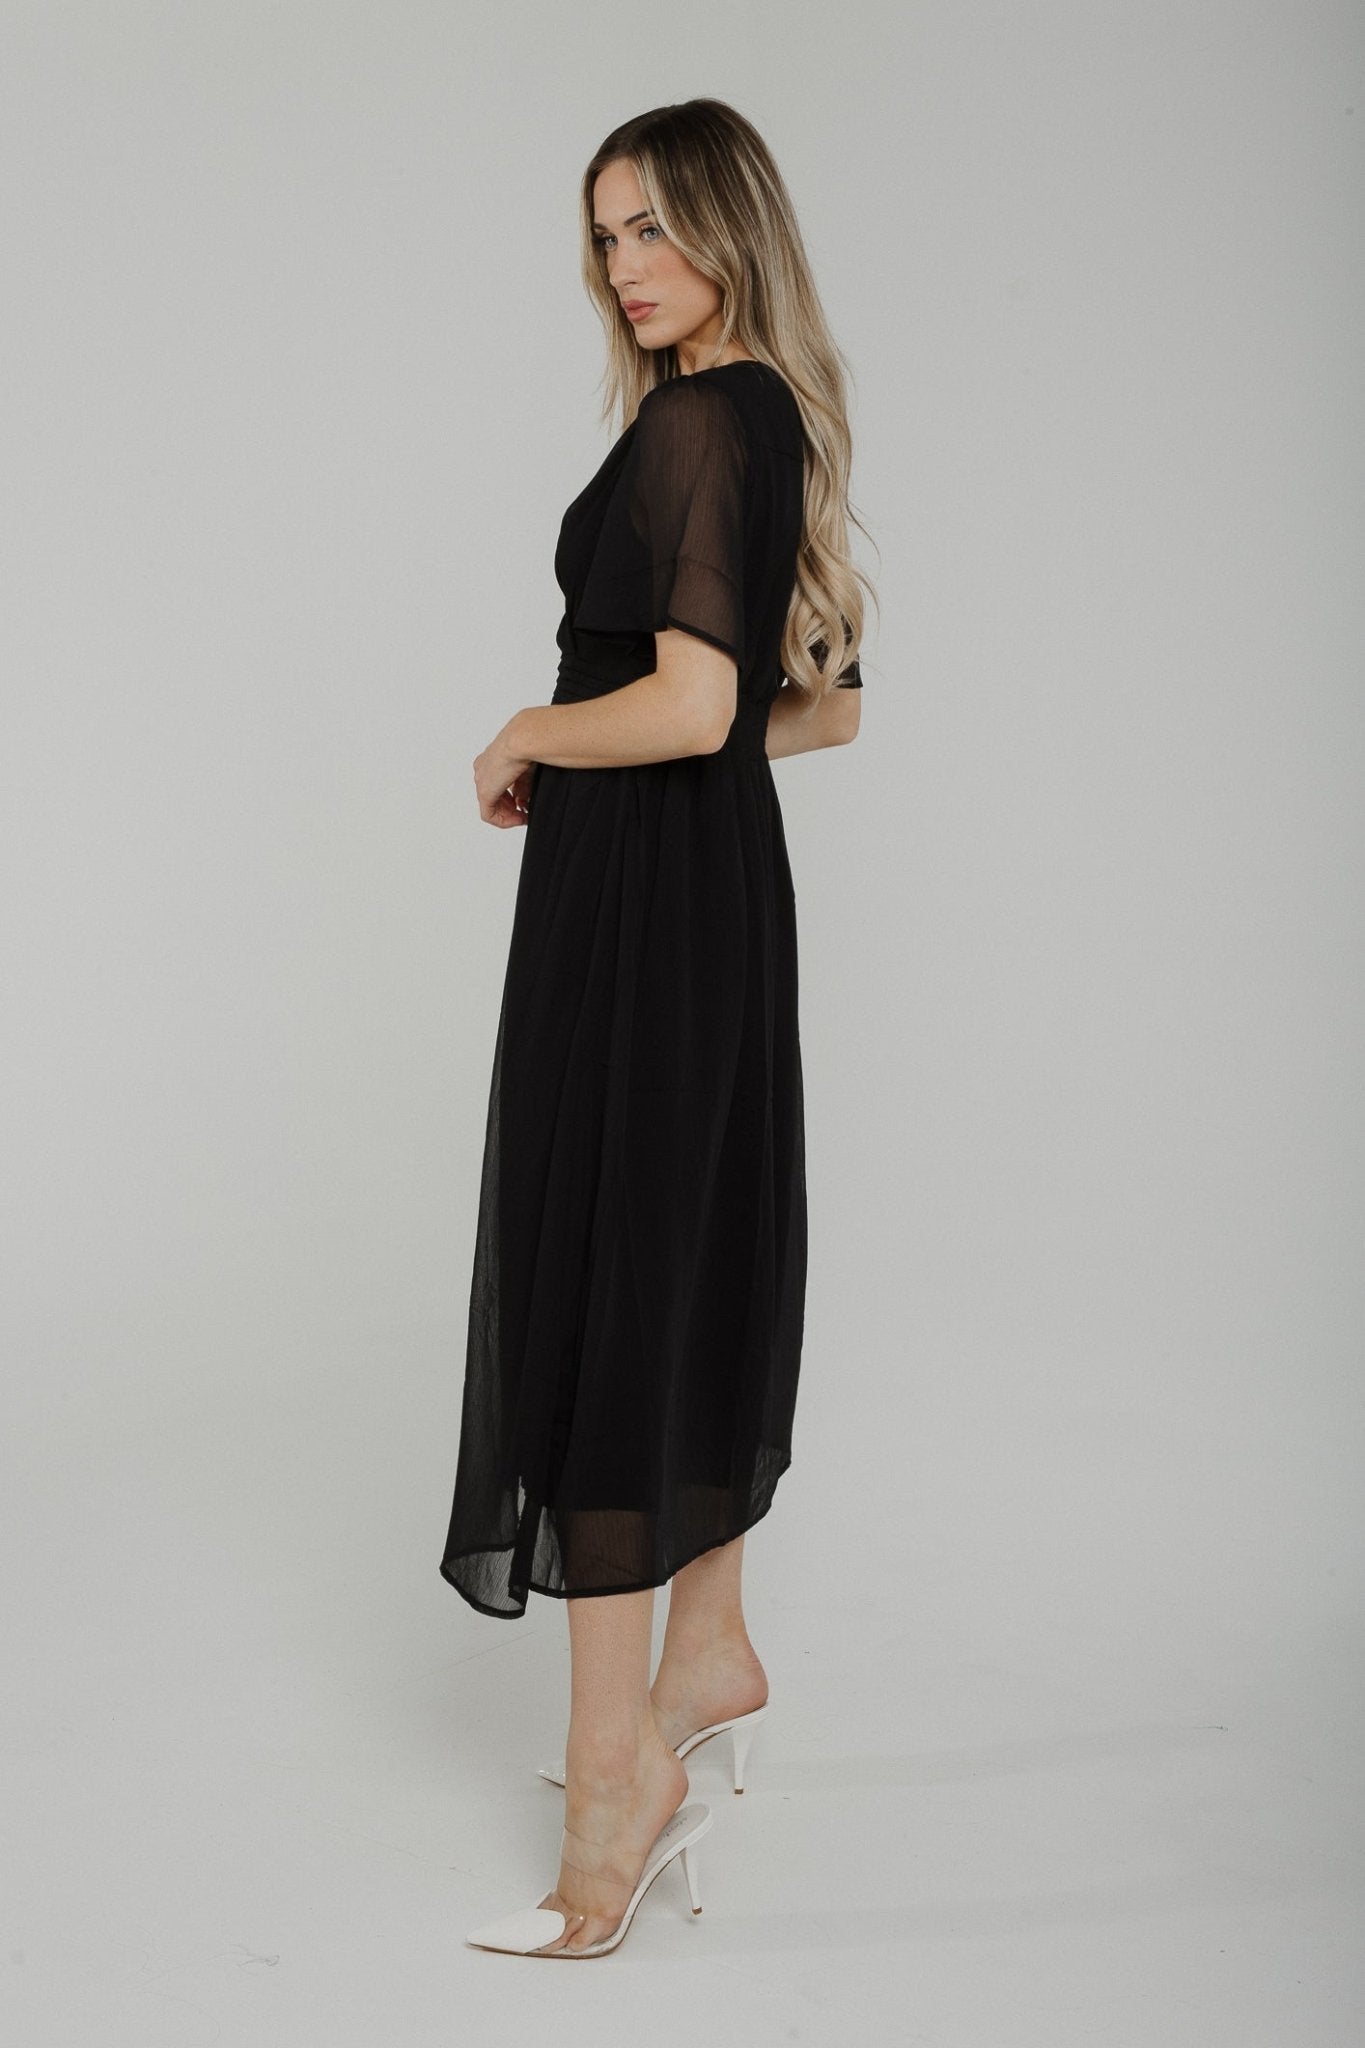 Polly Sheer Sleeve Dress In Black - The Walk in Wardrobe